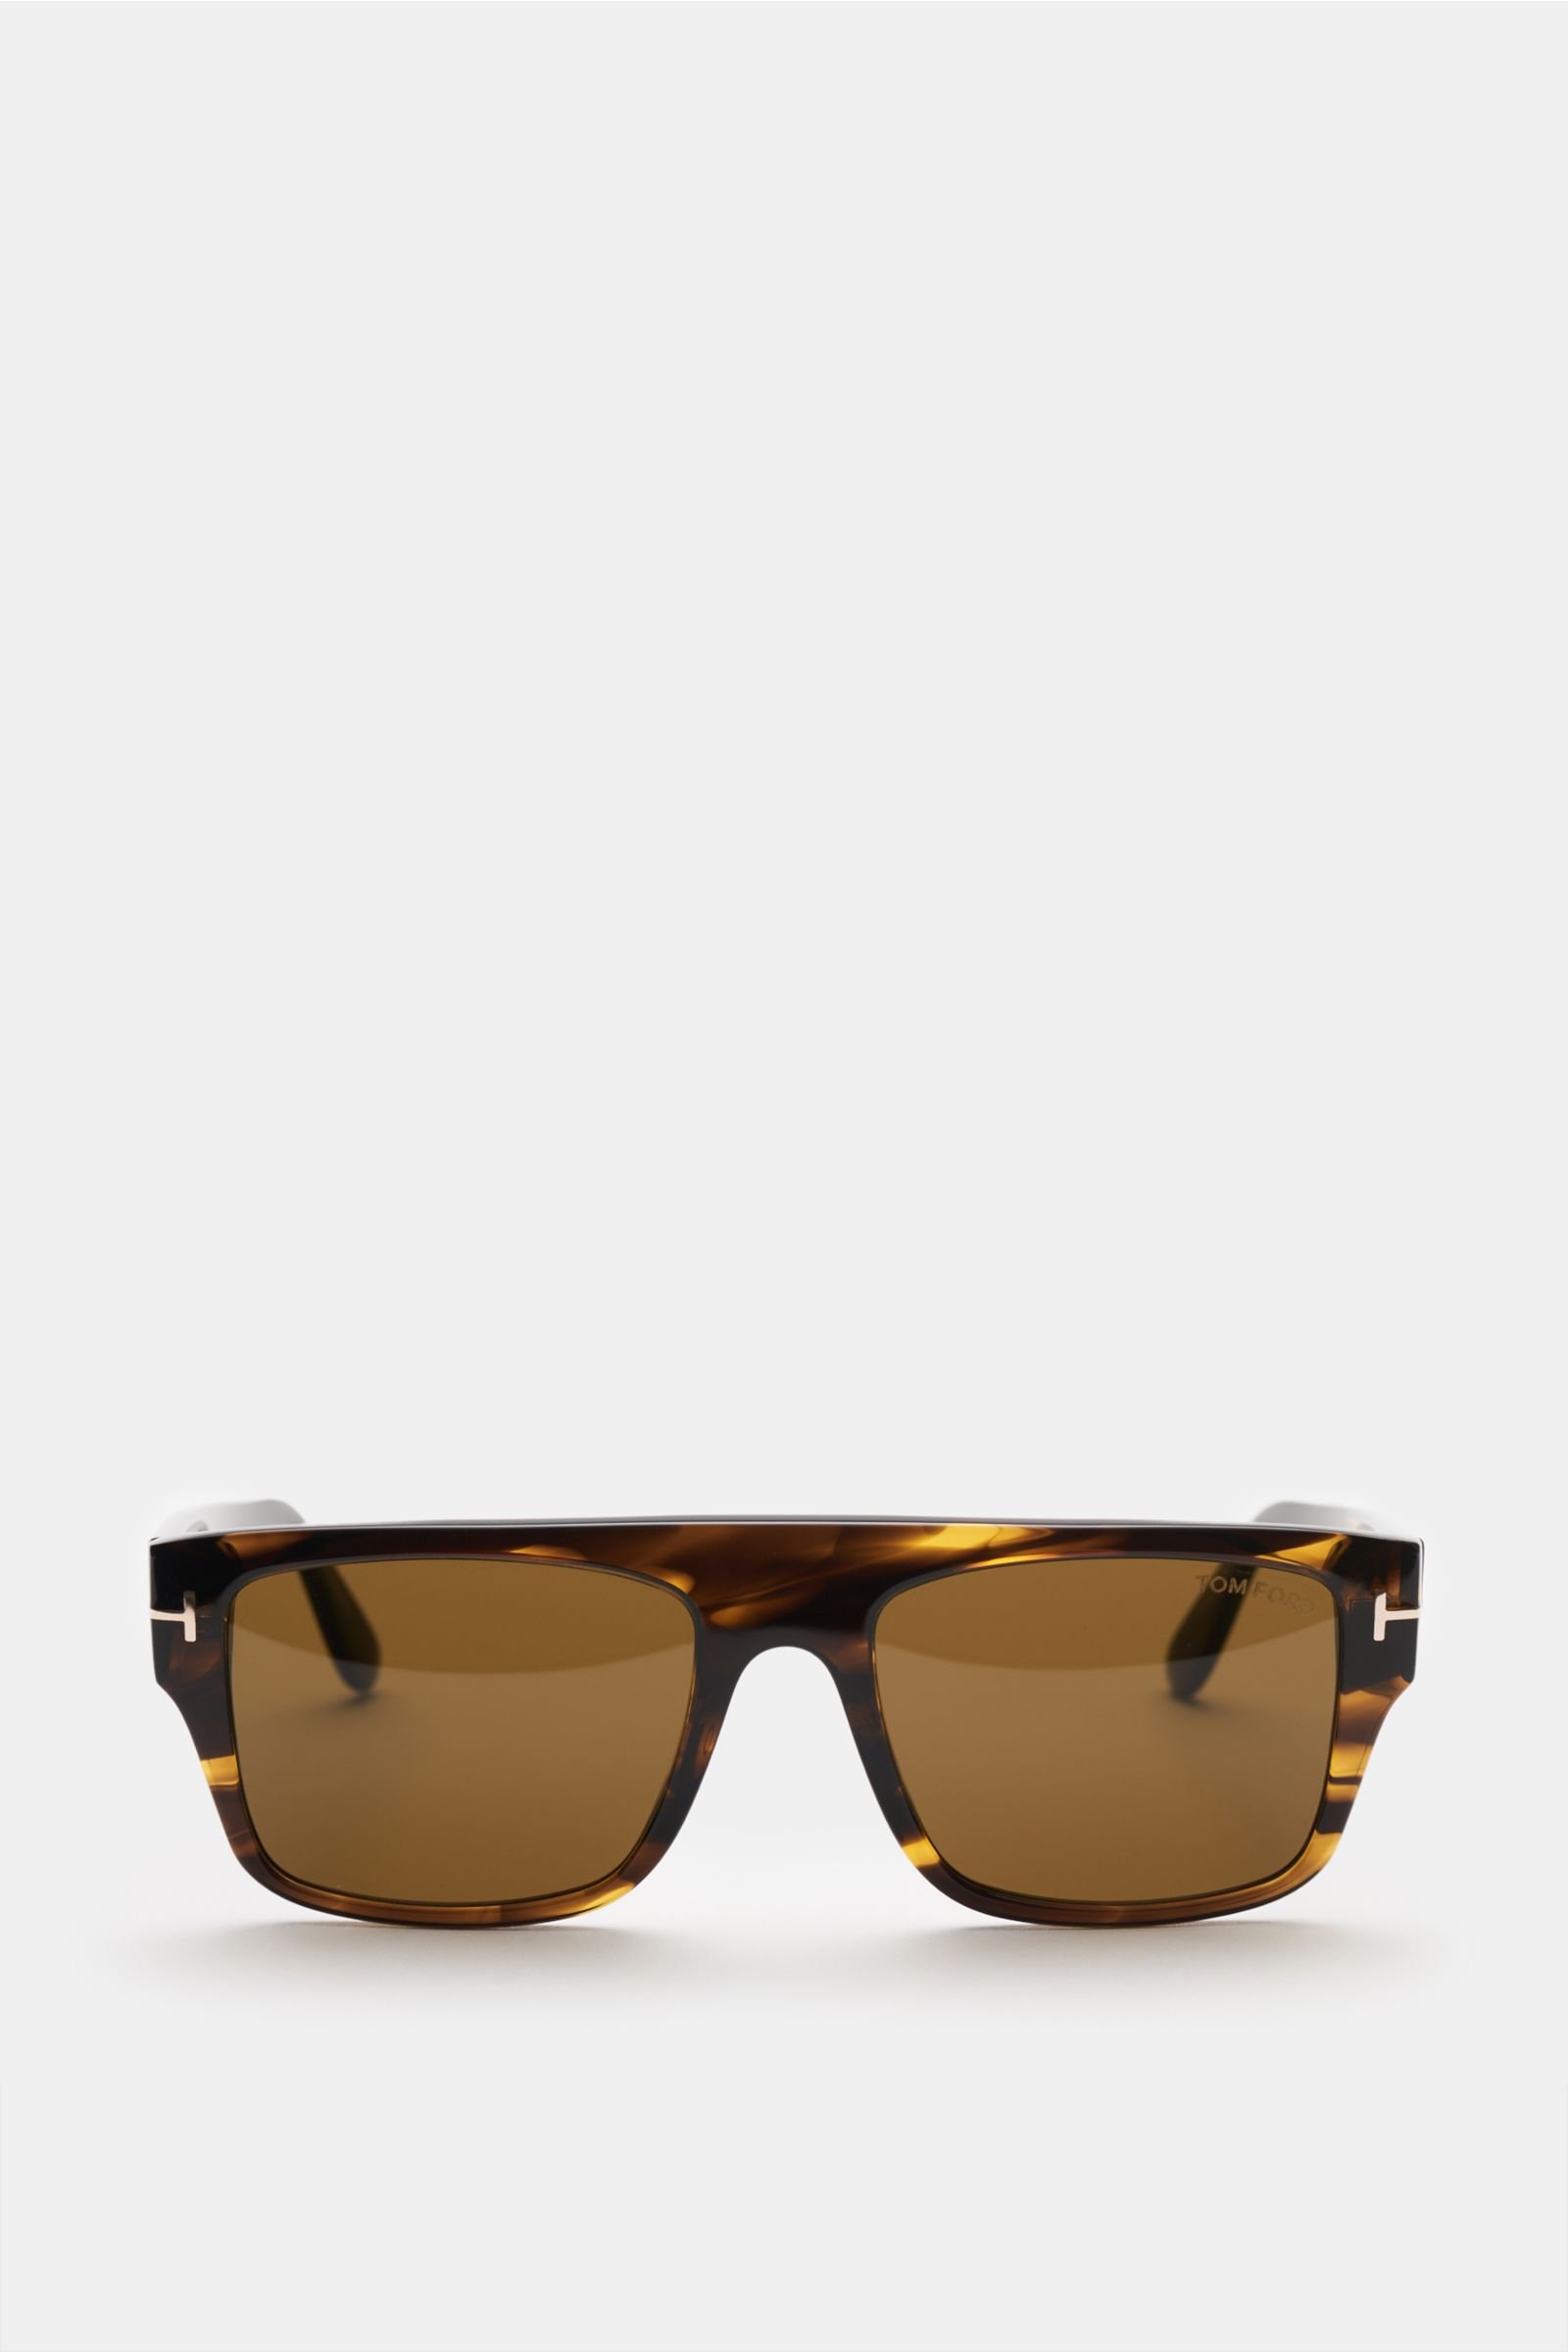 Sunglasses 'Dunning' dark brown/yellow patterned